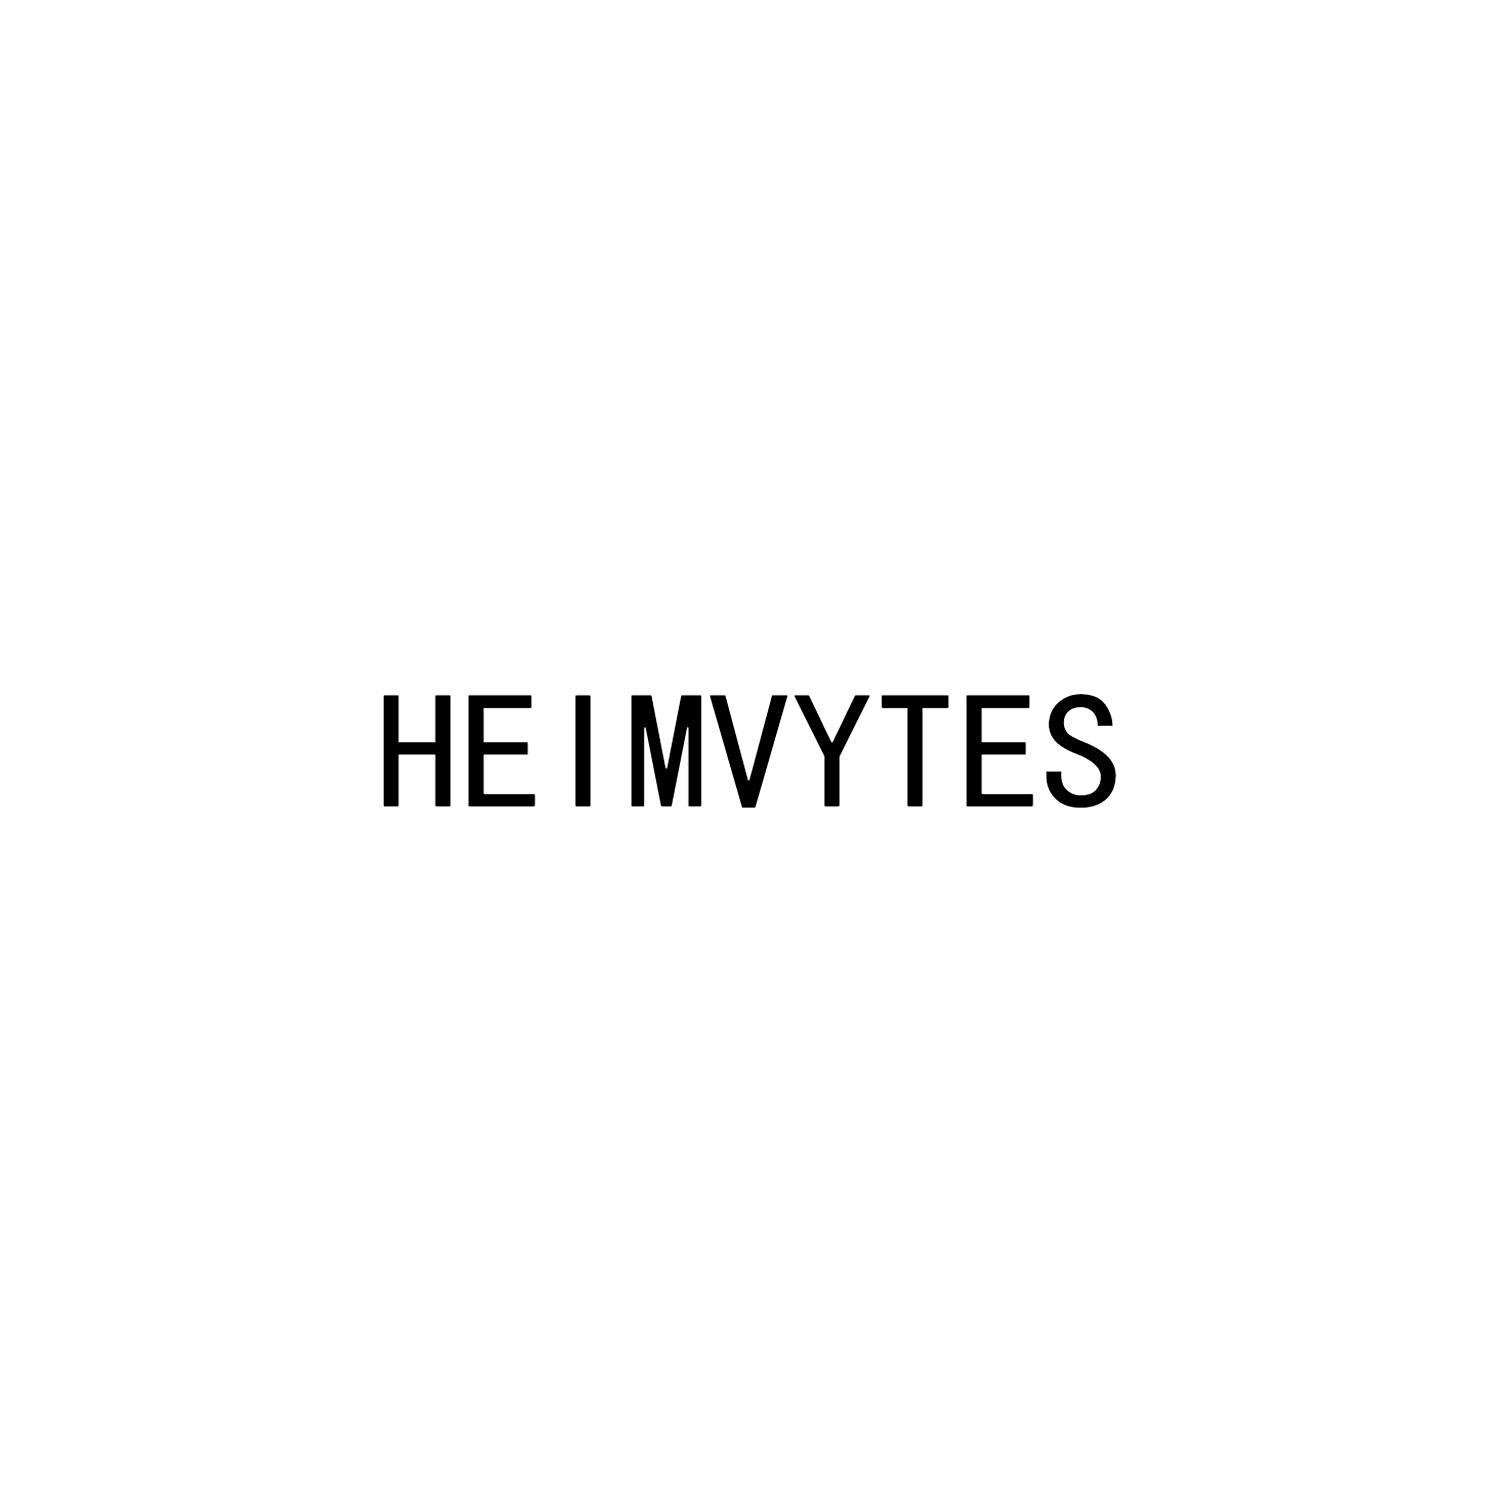 HEIMVYTES